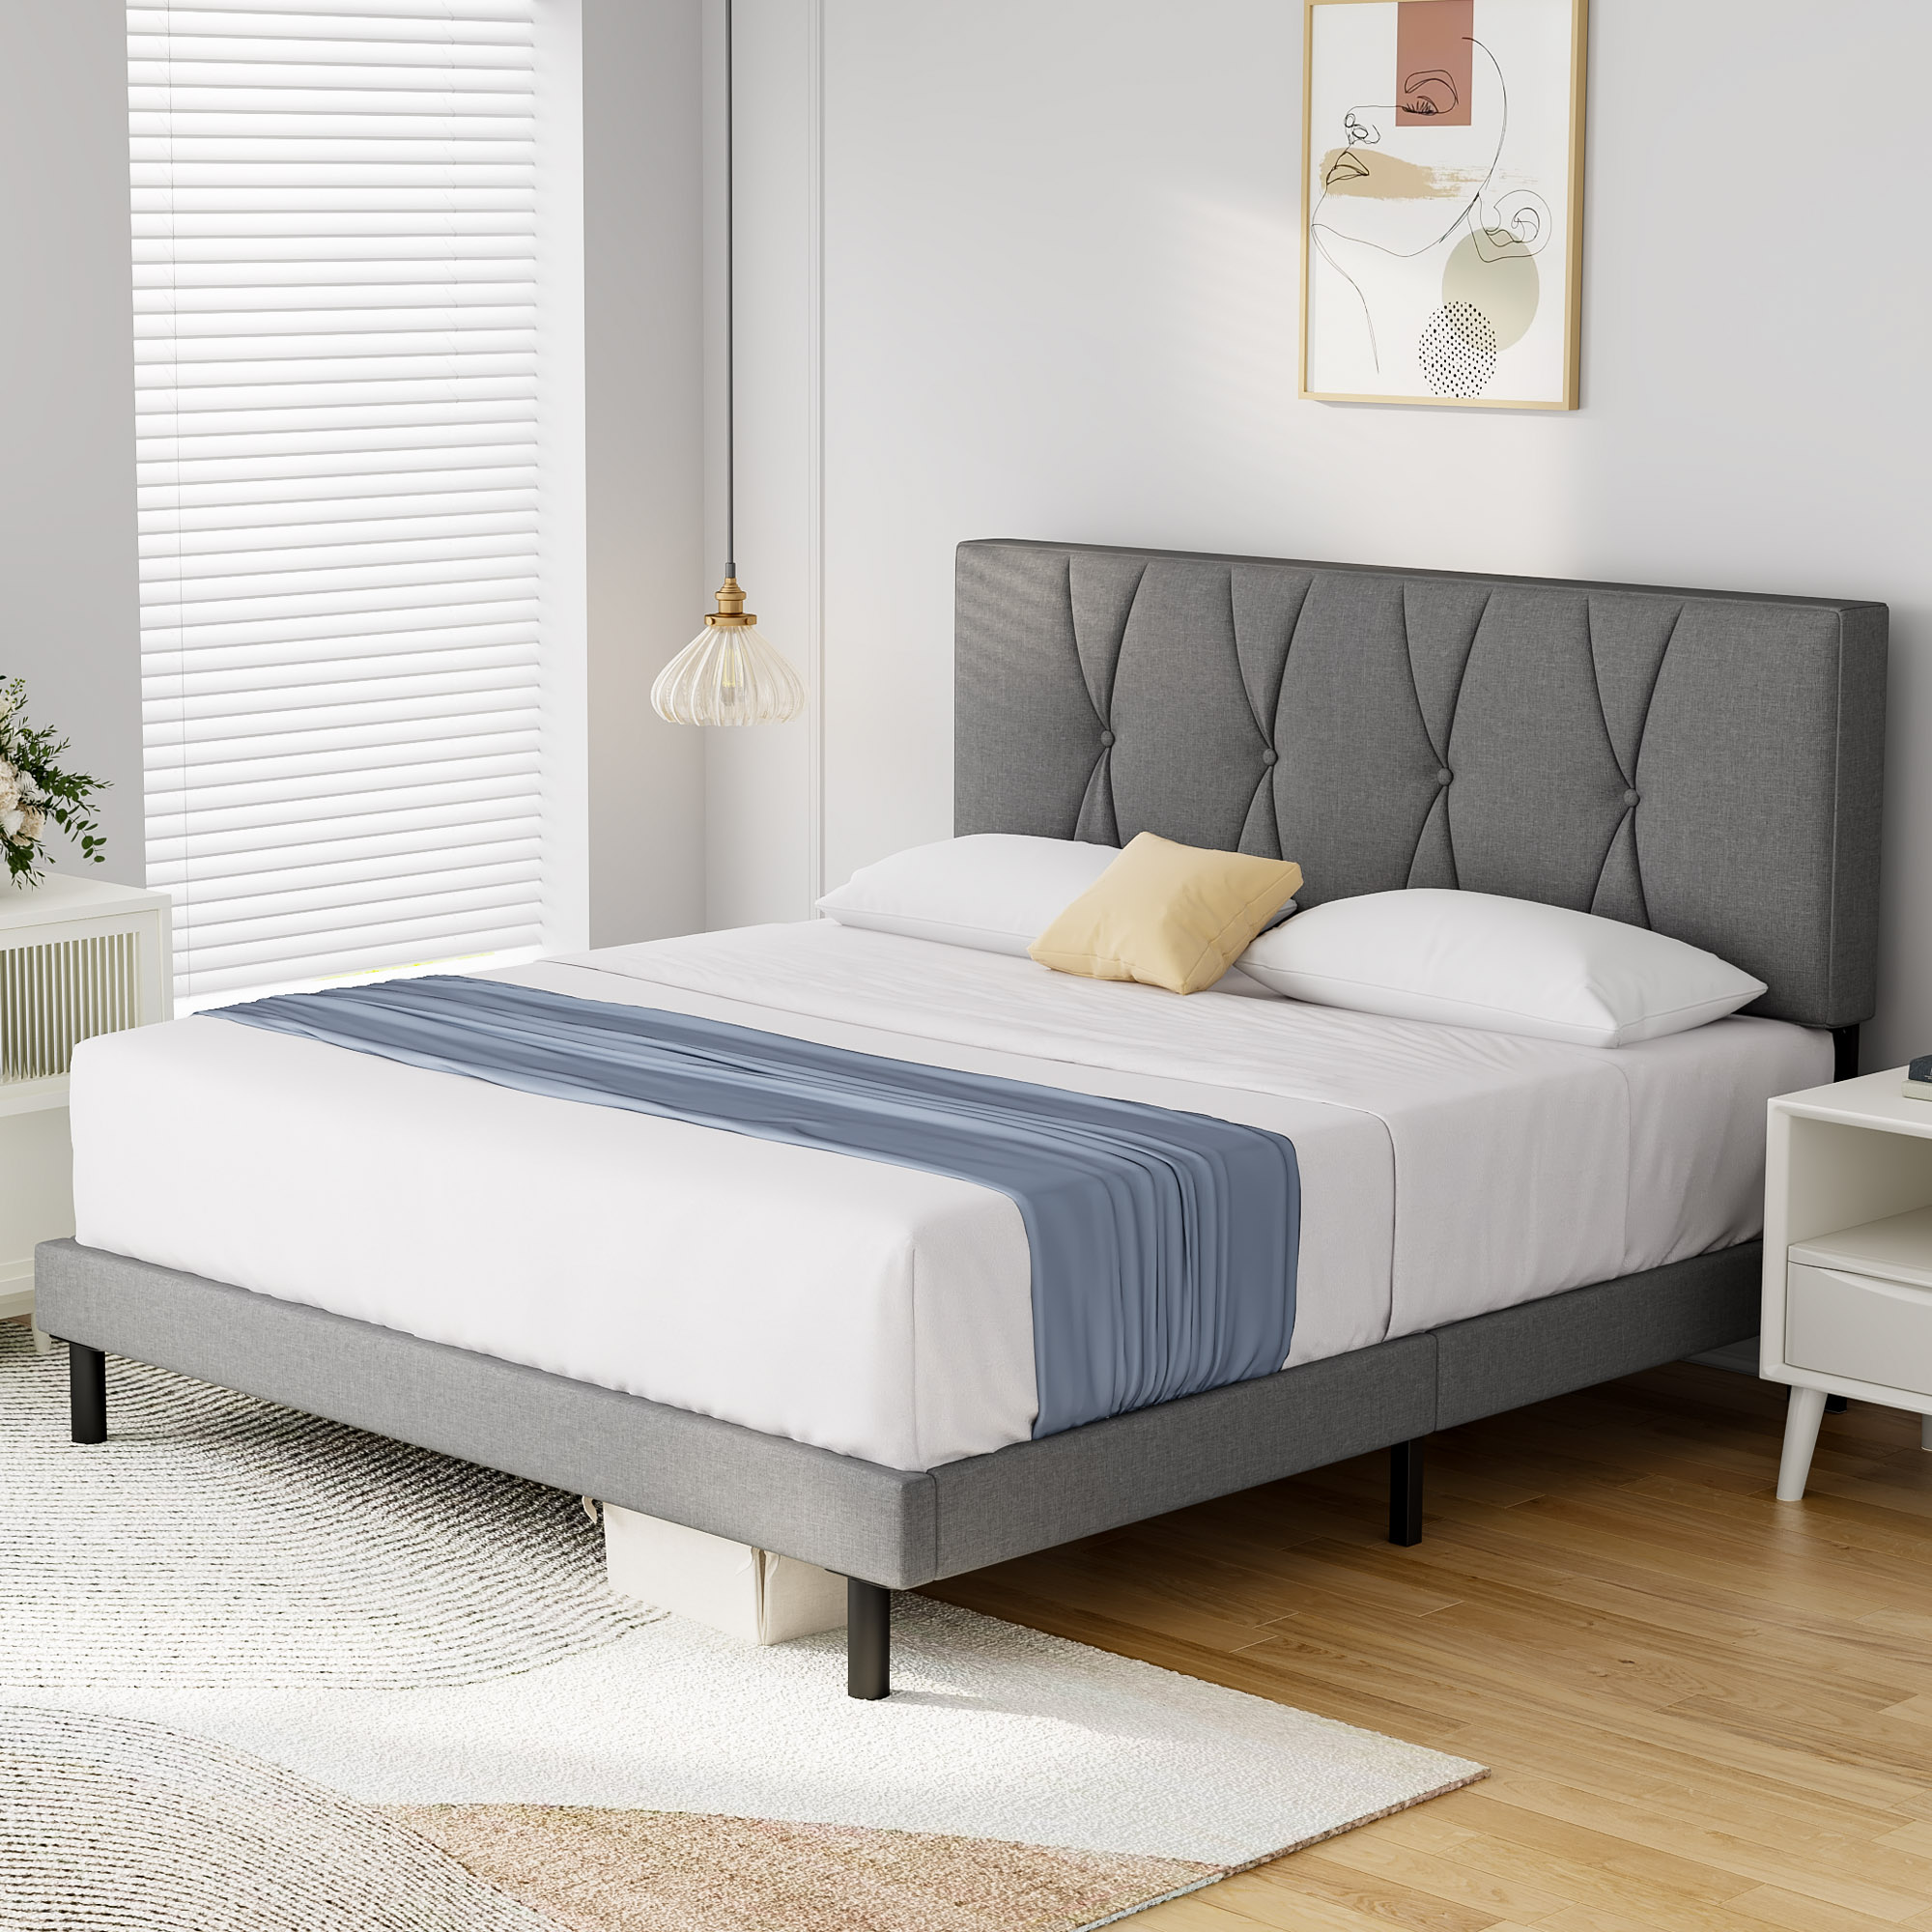 King Bed Frame, HAIIDE King Size Platform Bed With Fabric Upholstered Headboard,Light Grey - image 2 of 7